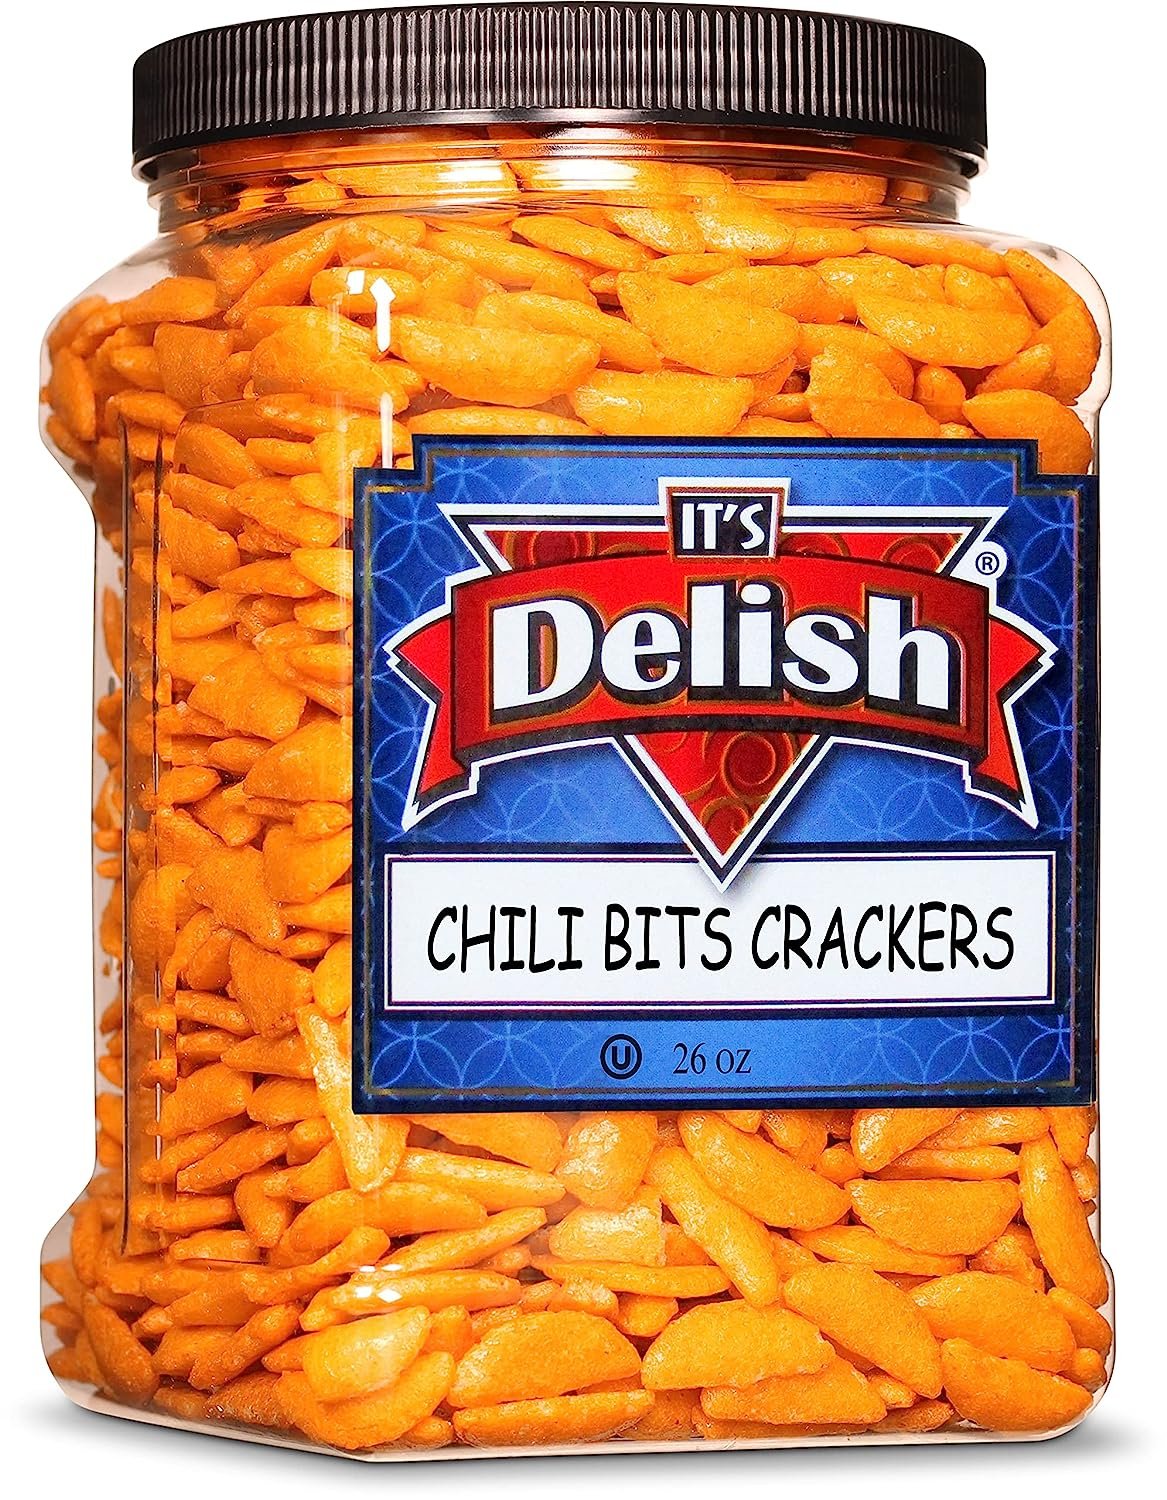 Oriental Chili Bits Rice Crackers –  26 OZ Jumbo Container